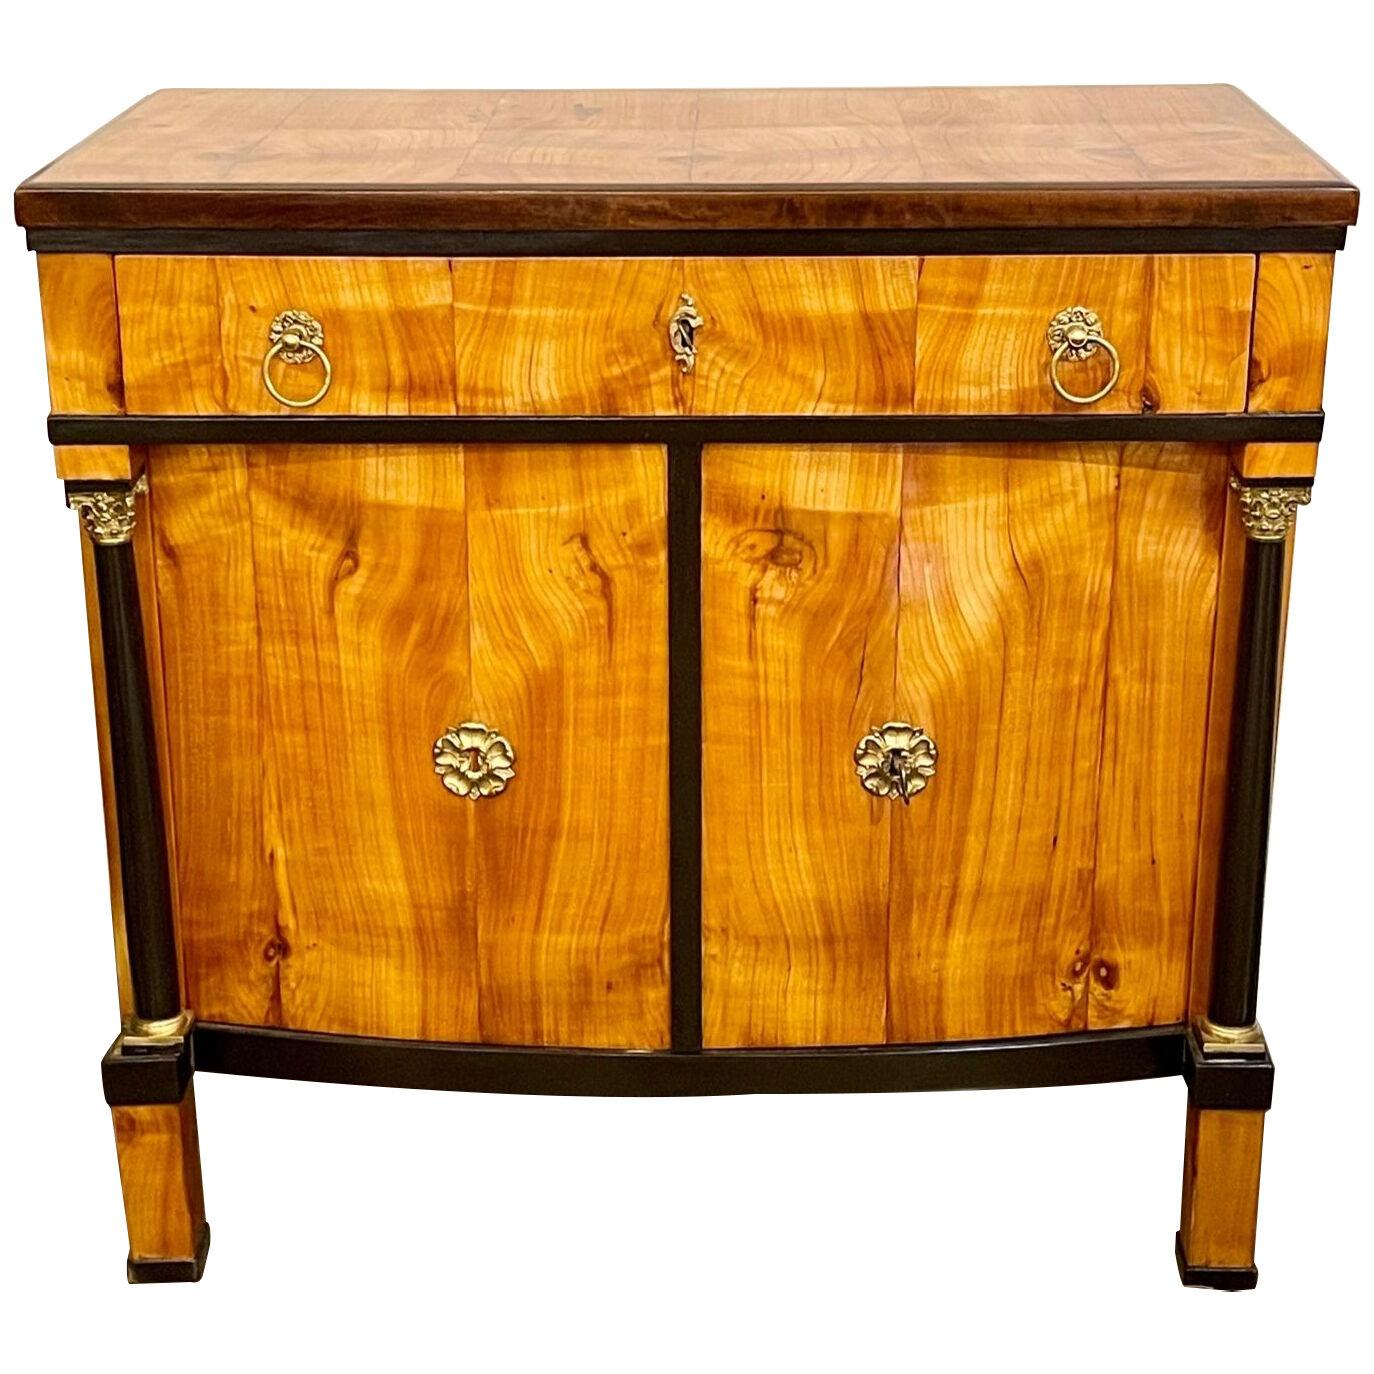 19th Century German Biedermeier Cherry Wood Cabinet